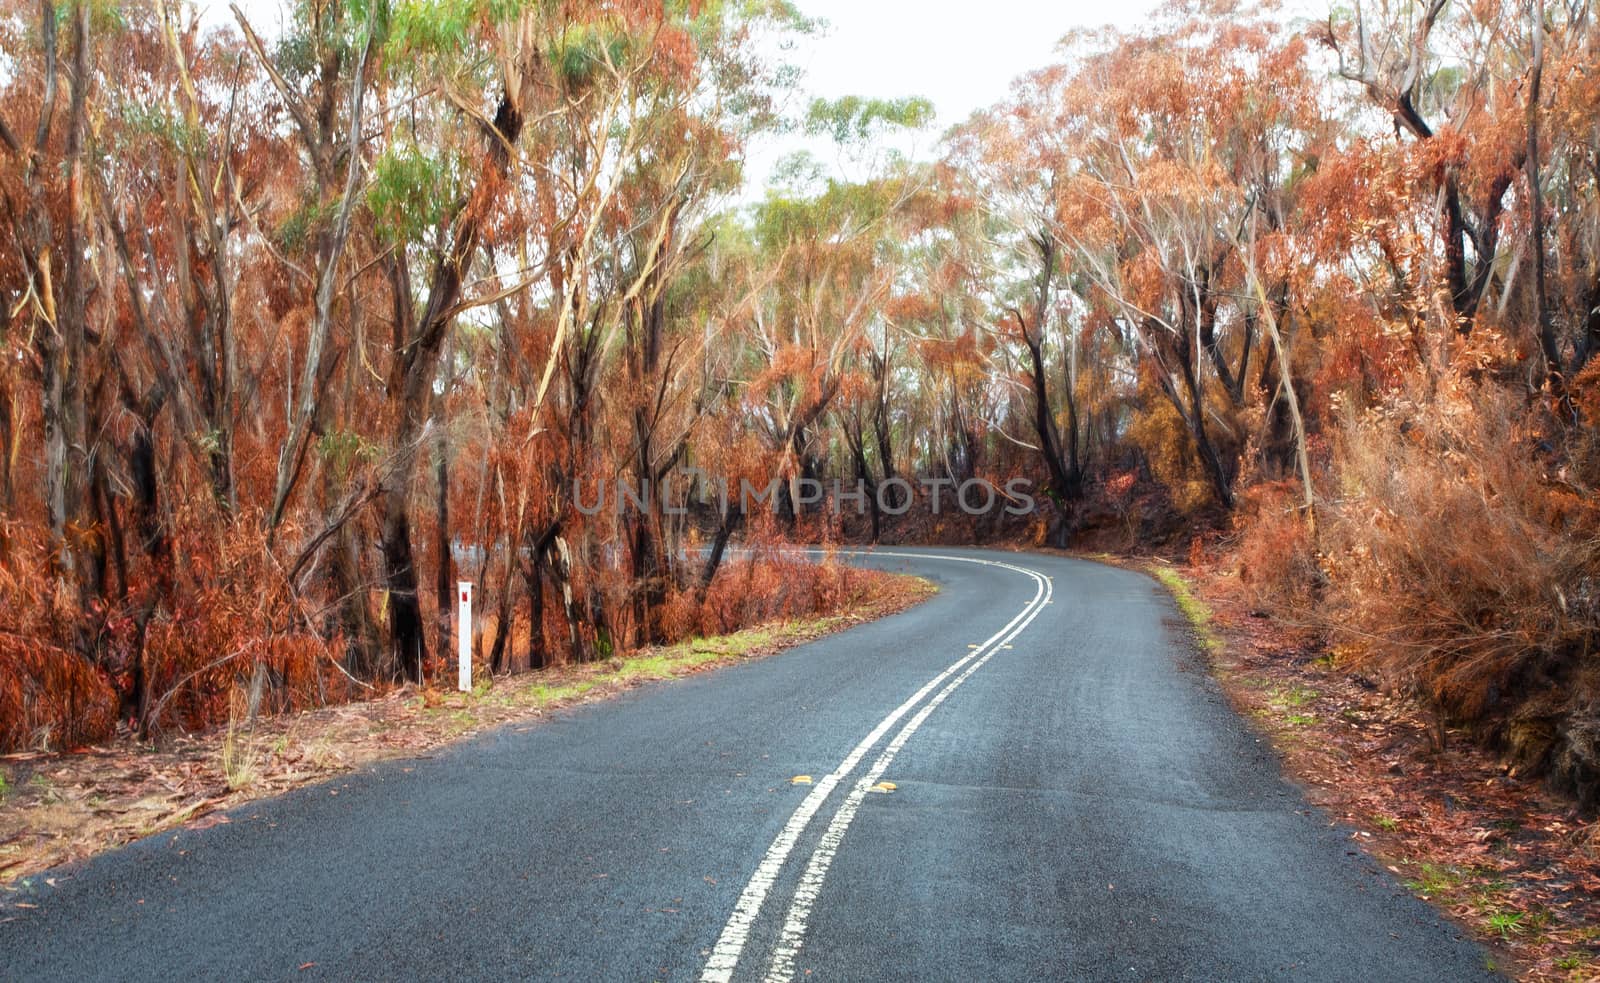 Curving road through buirnt bush land in Australia by lovleah